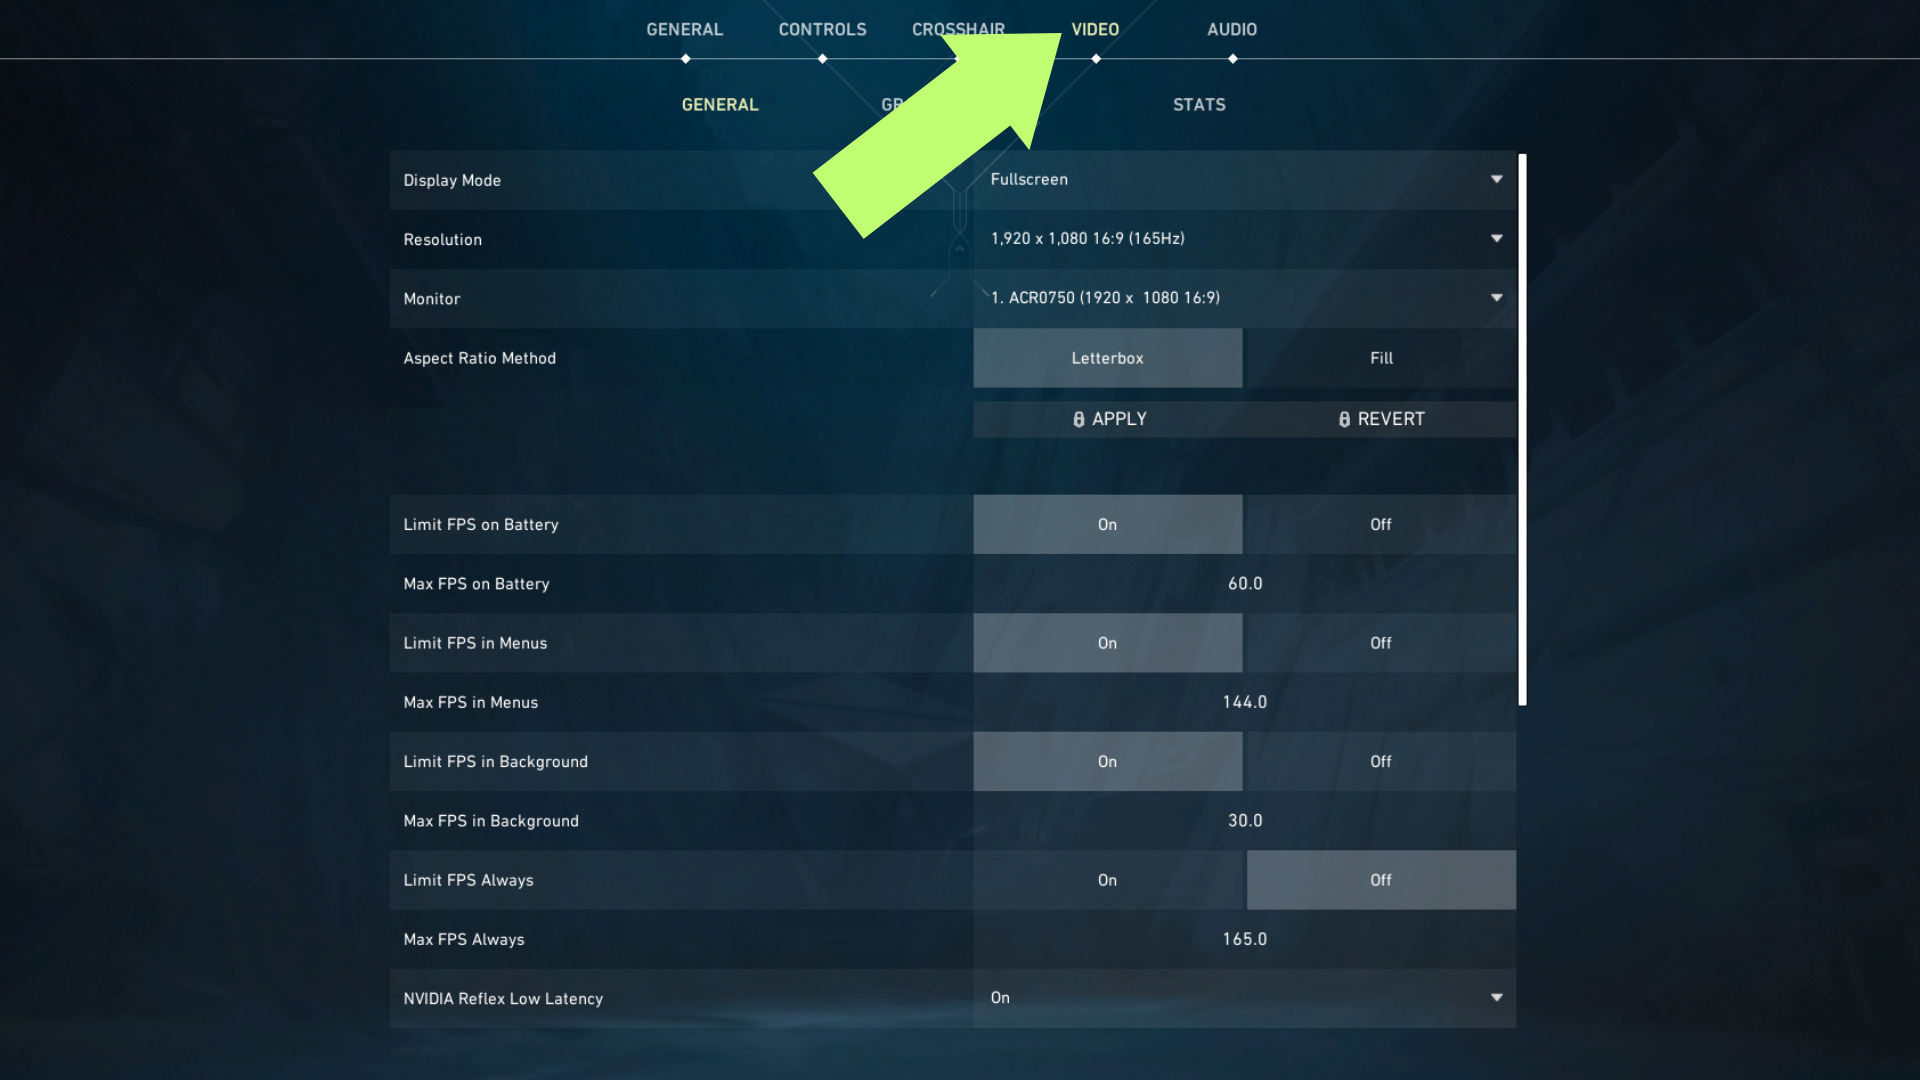 A screenshot of the Video tab in the settings menu in Valorant